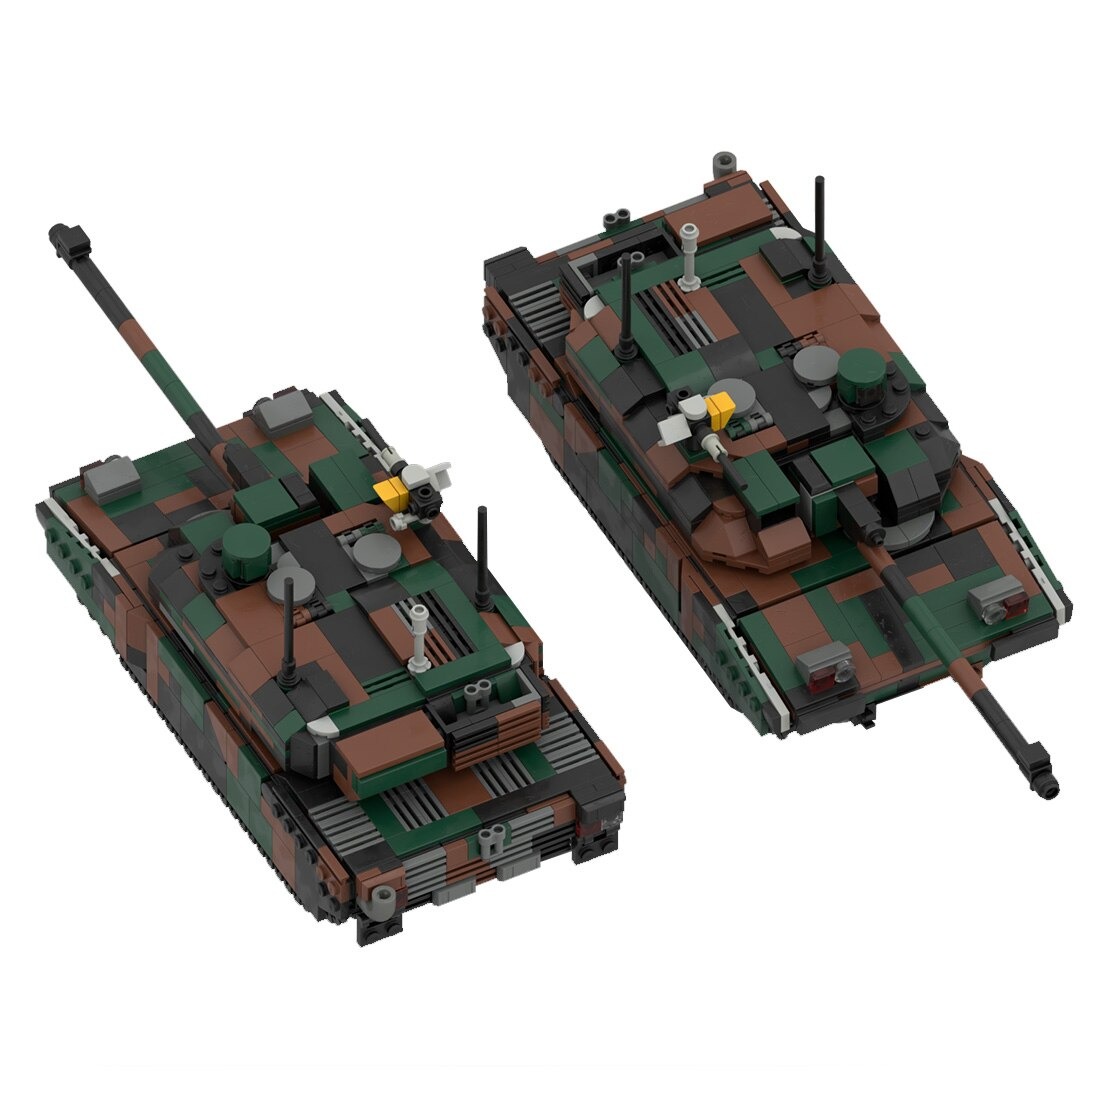 moc 34858 leclerc main battle tank model main 4 - KAZI Block